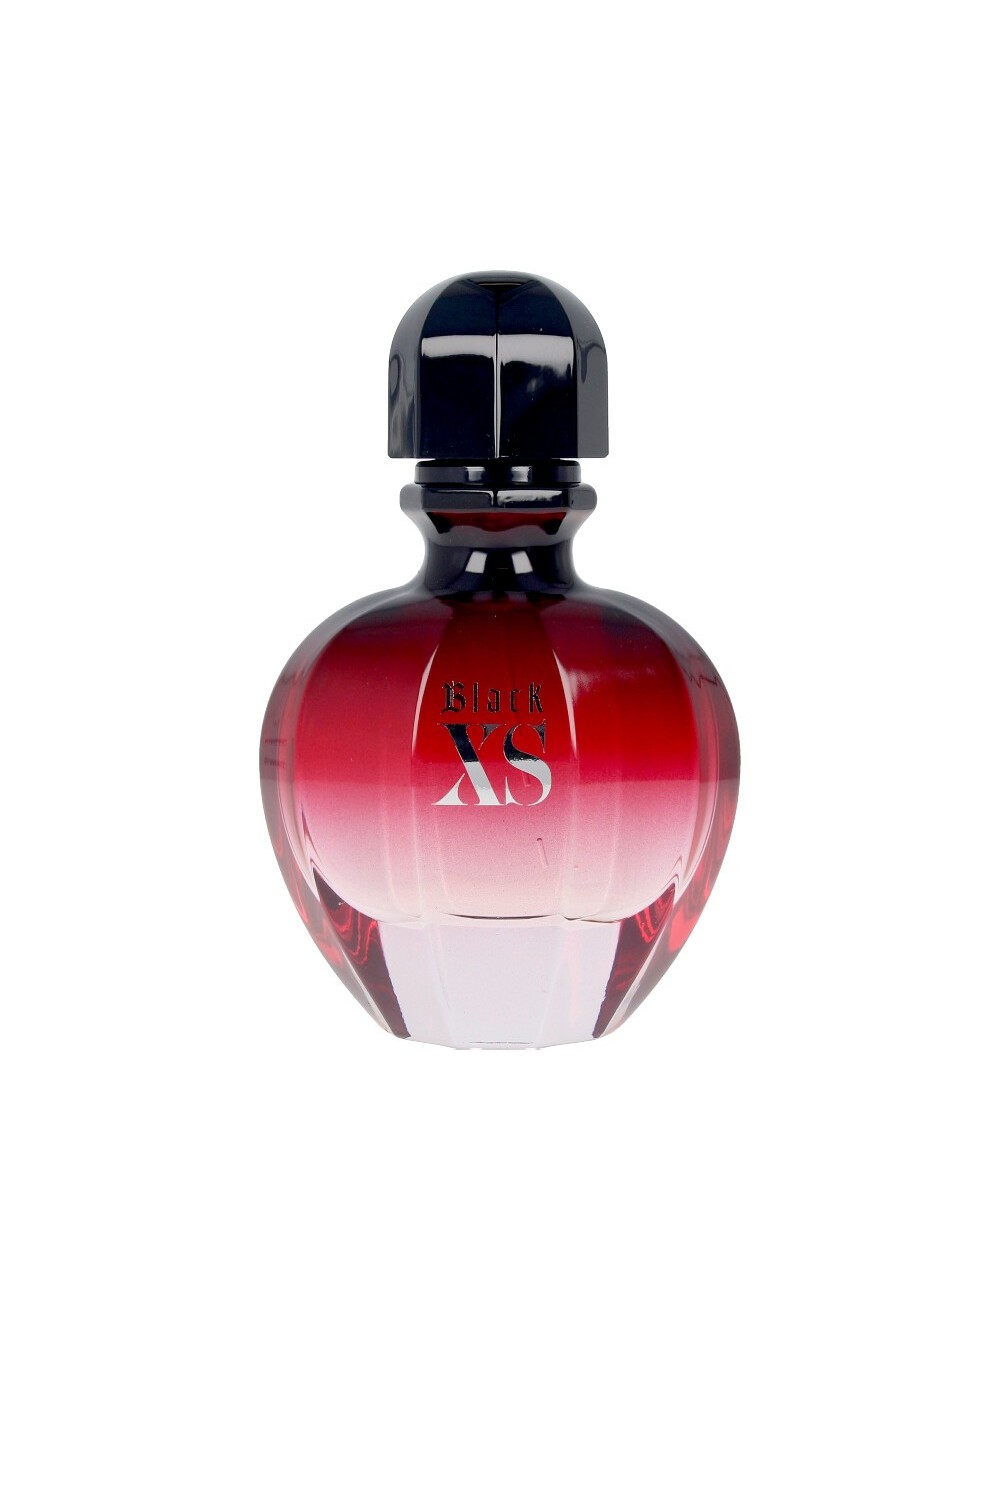 Paco Rabanne Black XS For Her Eau De Perfume Spray 50ml